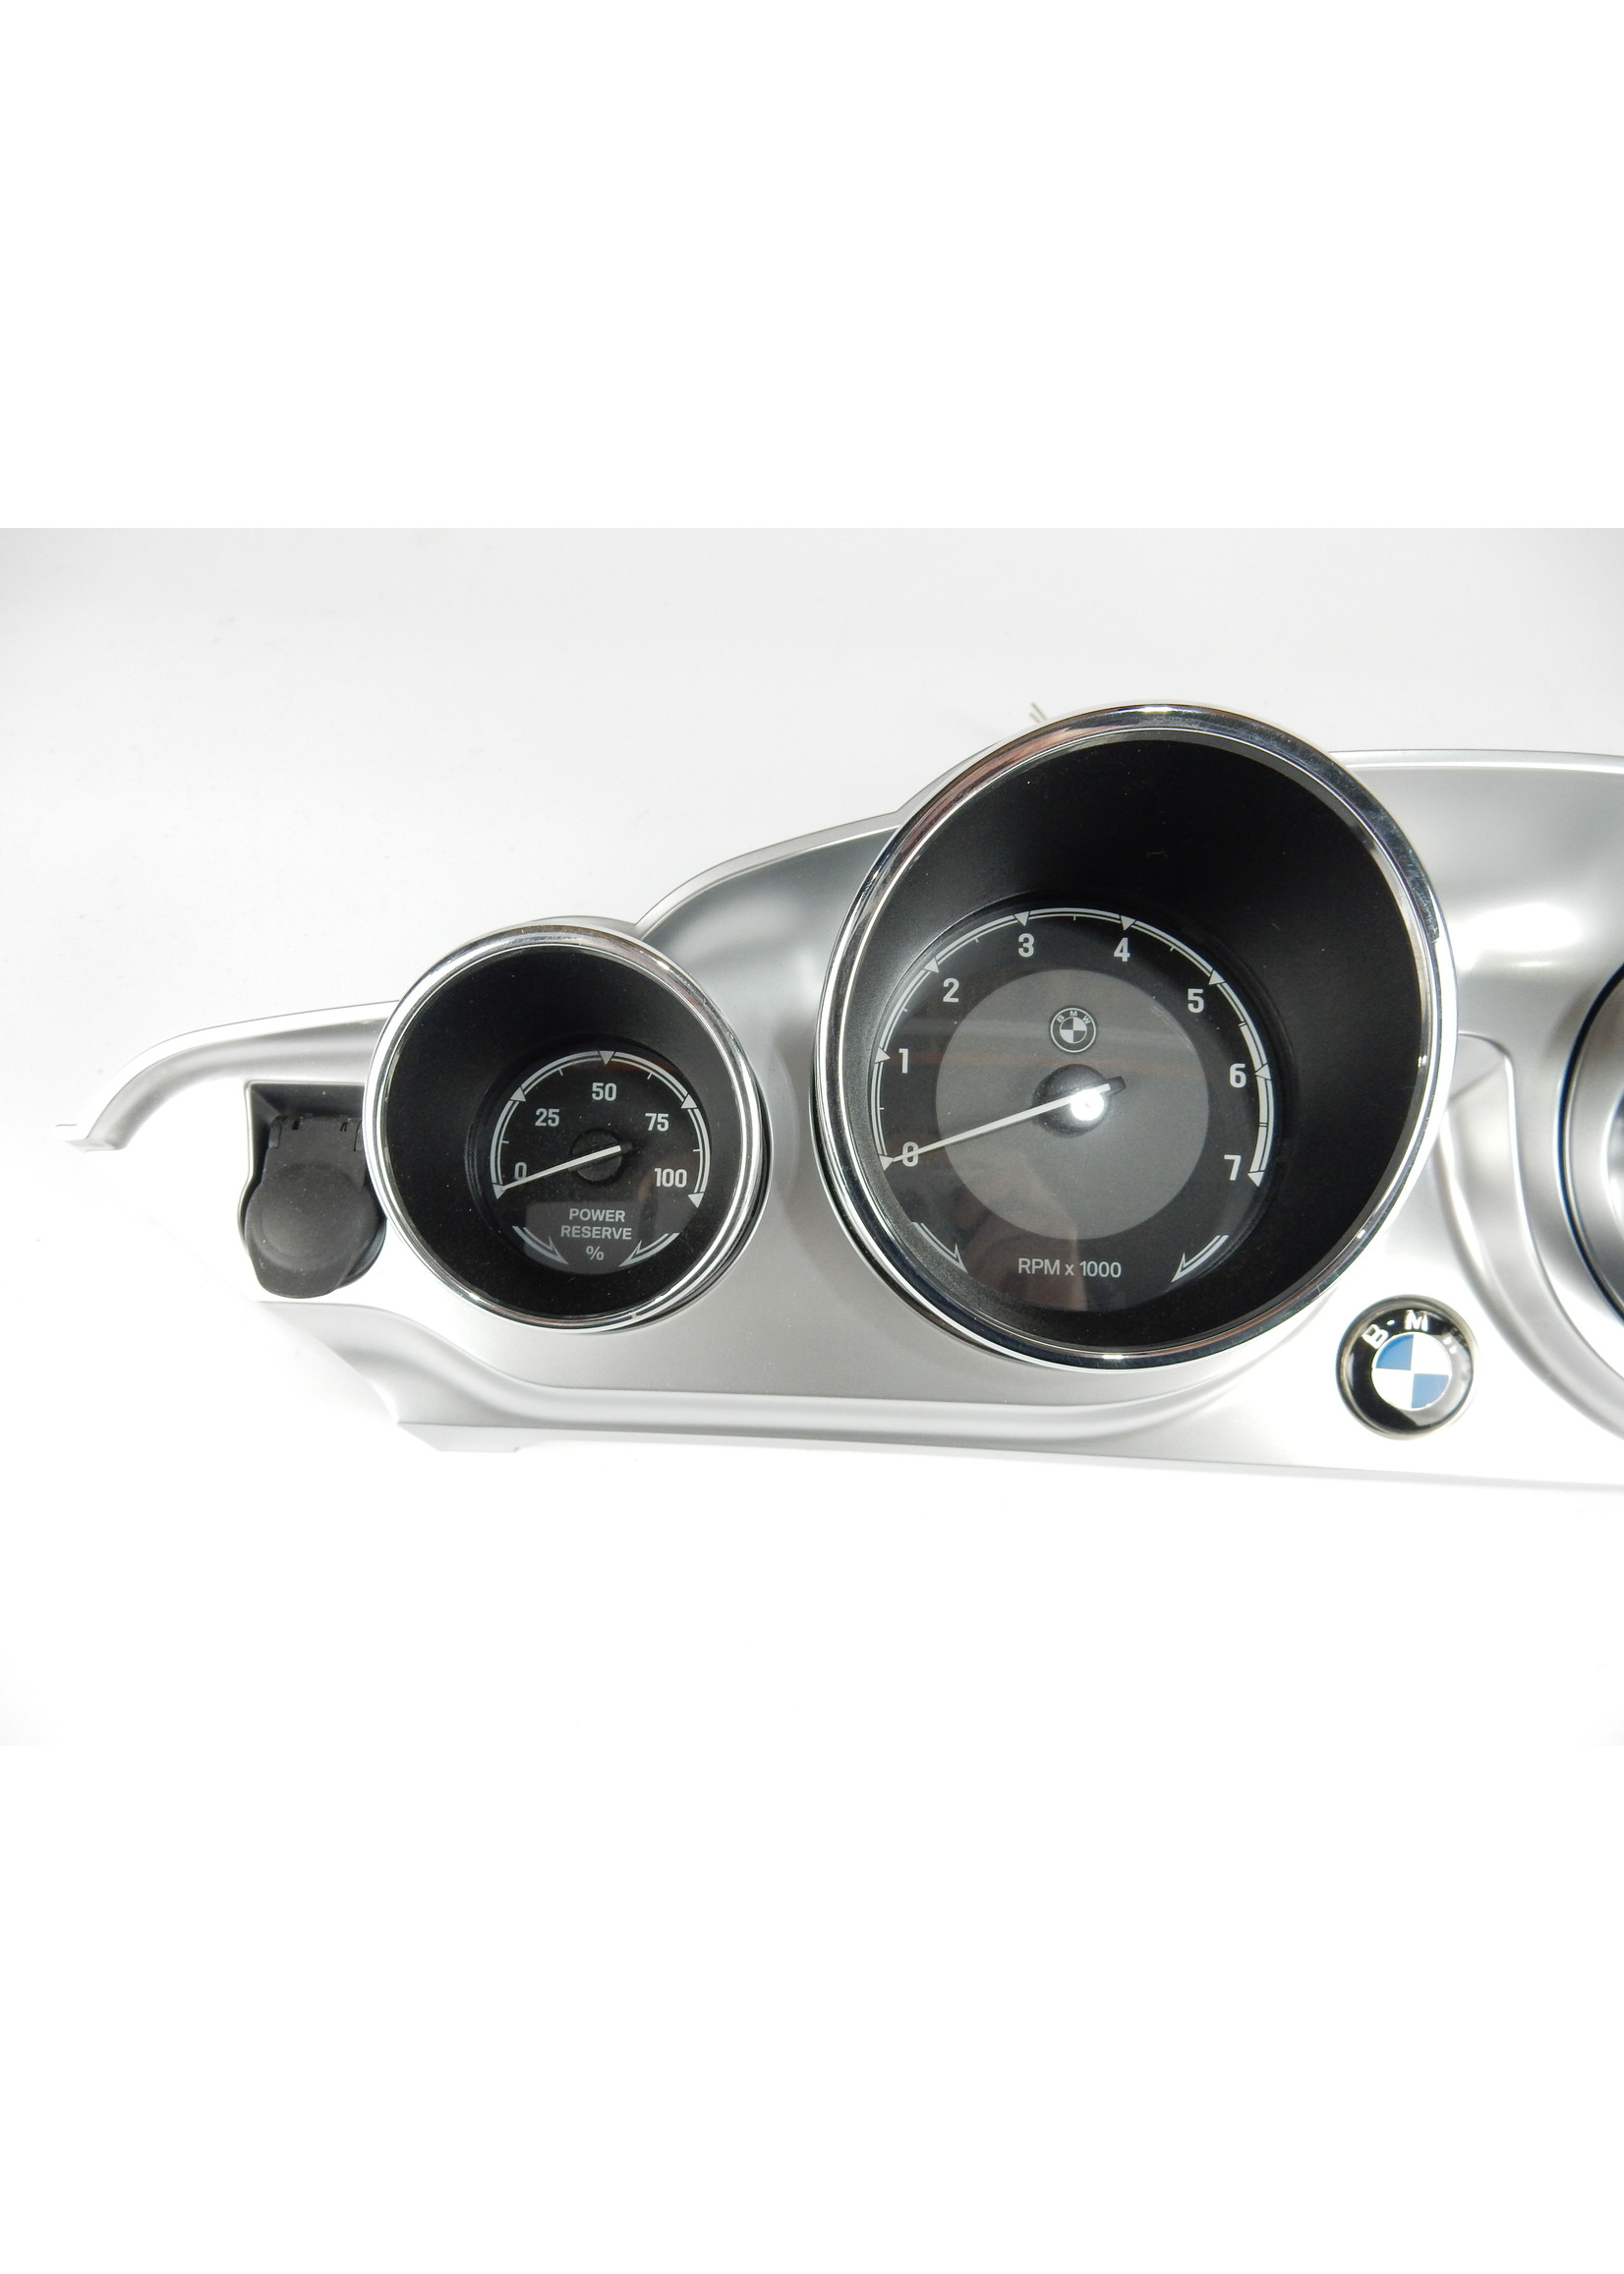 BMW BMW R18 B Transcontinental US Instrument panel CHROME / Revolution counter / Fuel level indicator / Power reserve display / 46639829082 / 62119480498 / 62119480499 / 62119480500